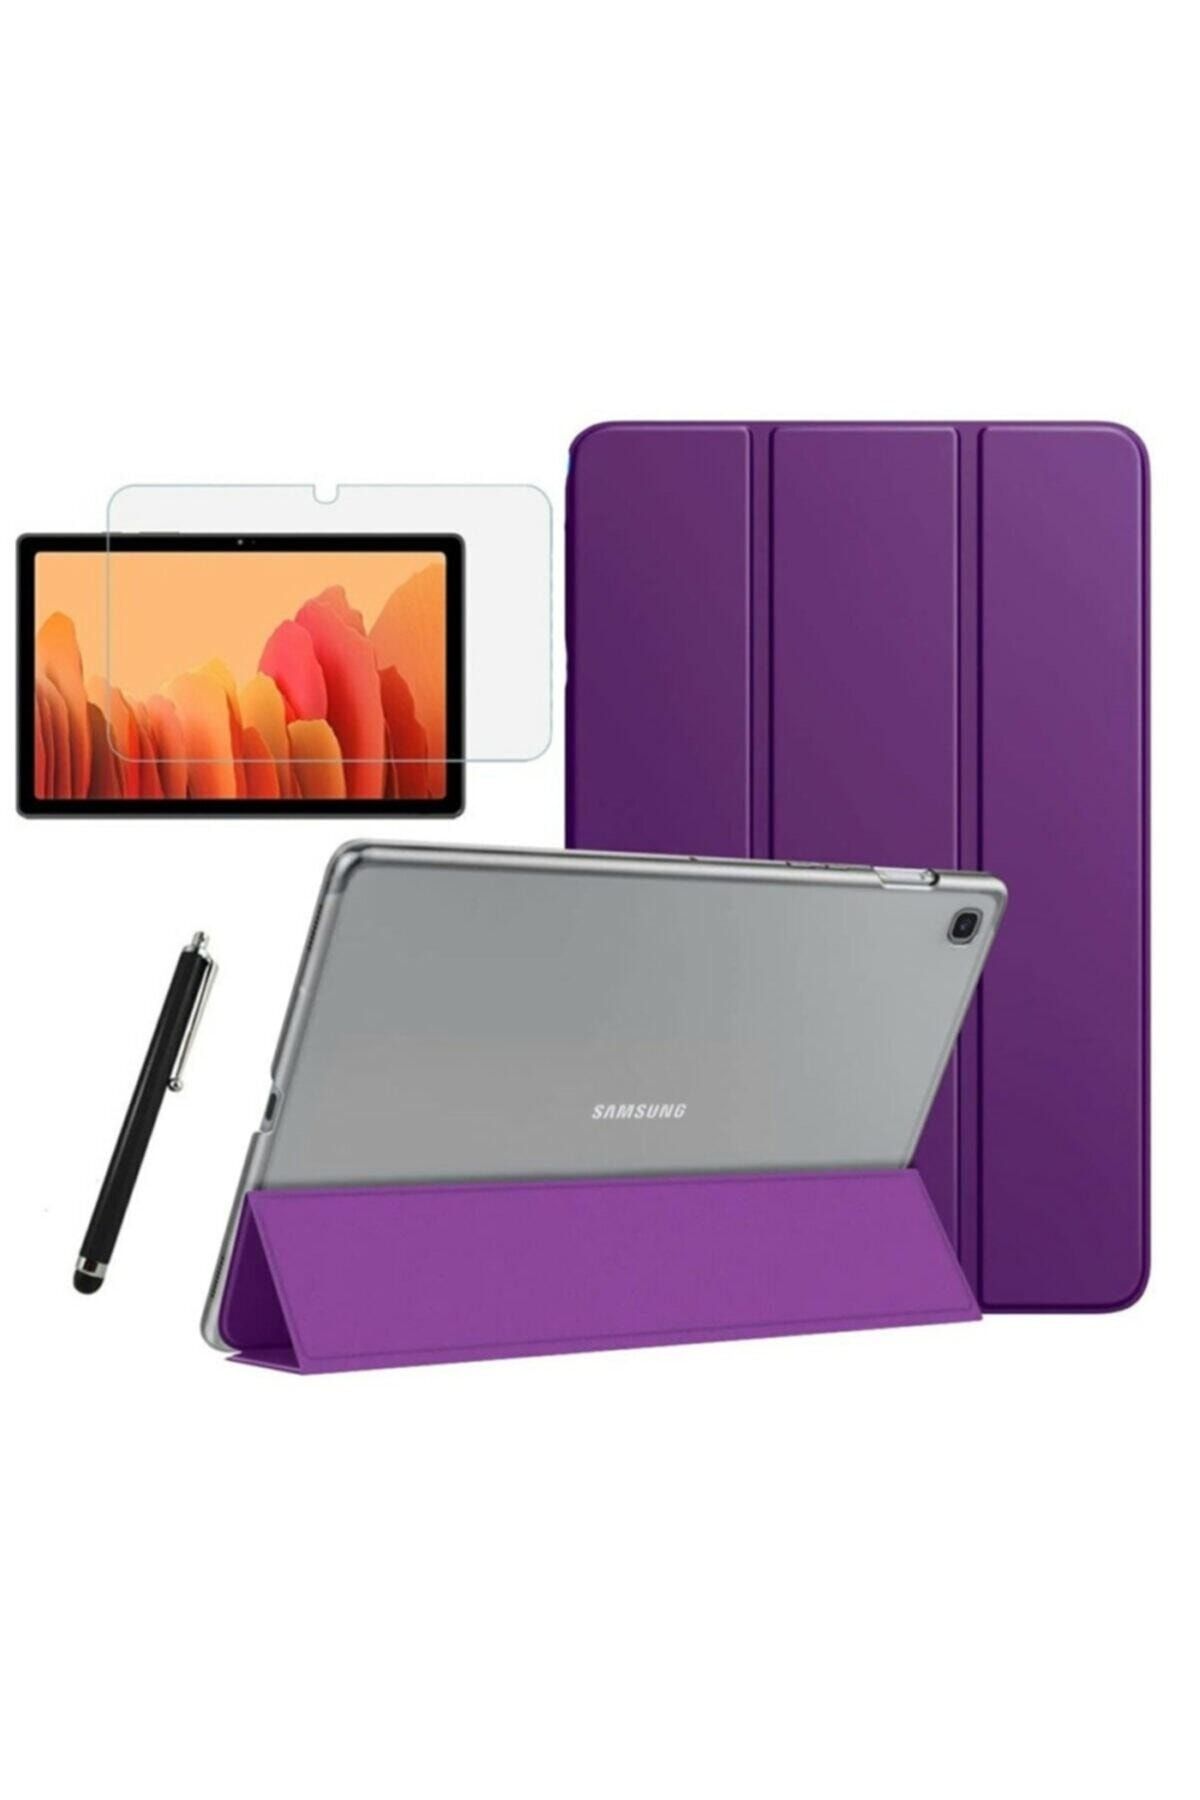 TEKNETSTORE Samsung Galaxy Tab S6 Lite Uyumlu Sm P610 P617 Smart Kapak Tablet Kılıfı + Ekran Koruyucu + Kalem